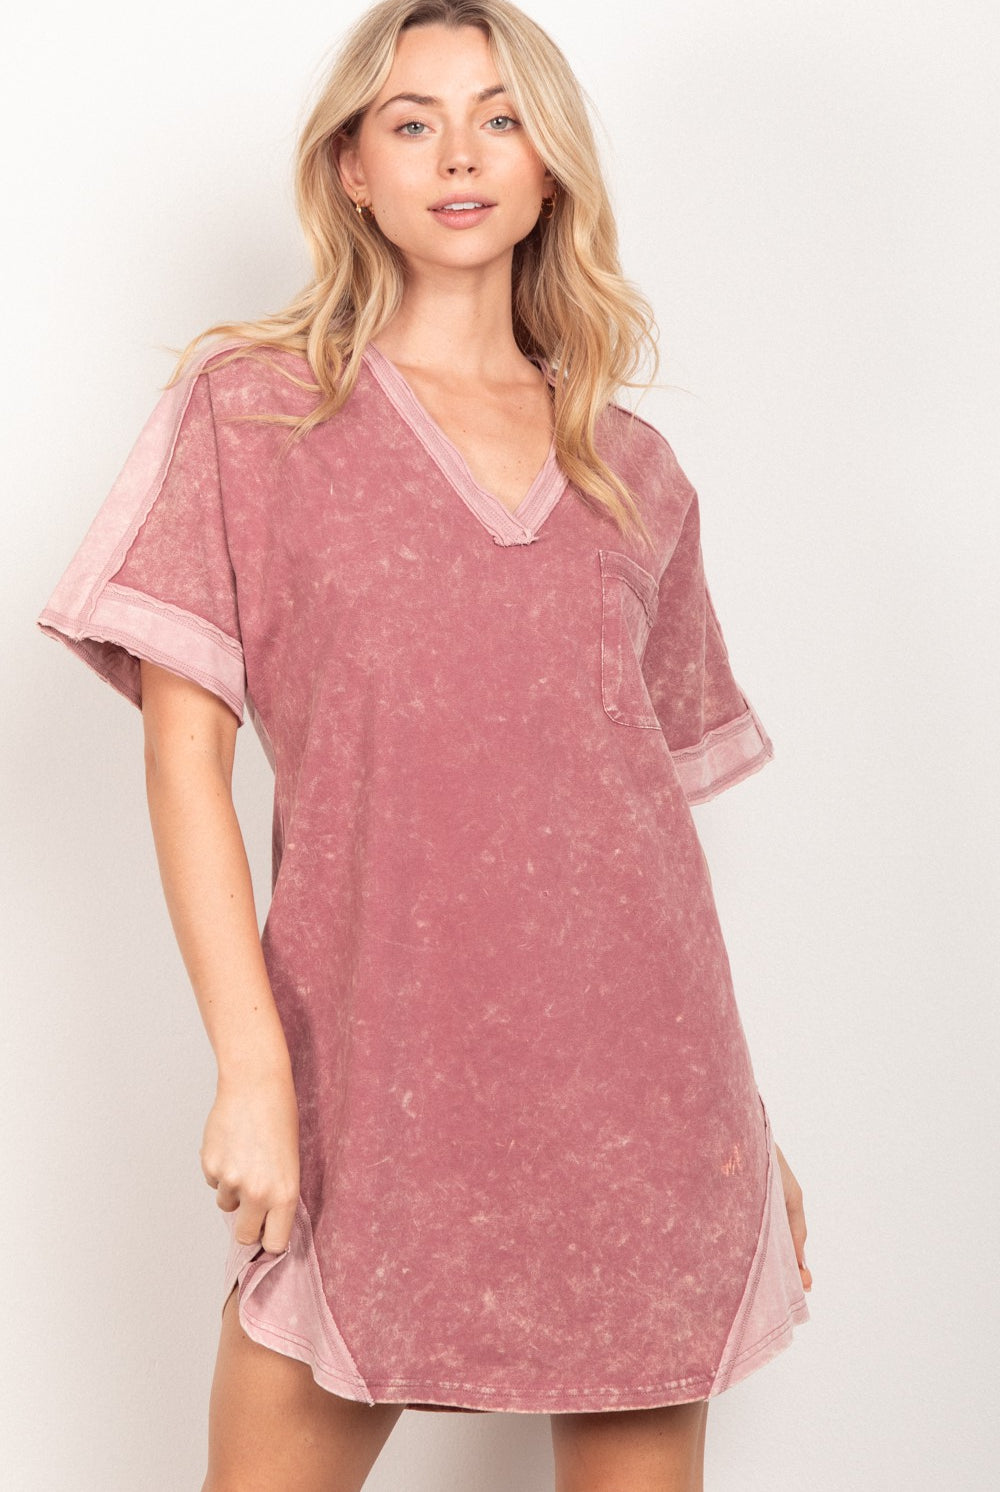 VERY J Short Sleeve V-Neck Tee Dress-Krush Kandy, Women's Online Fashion Boutique Located in Phoenix, Arizona (Scottsdale Area)